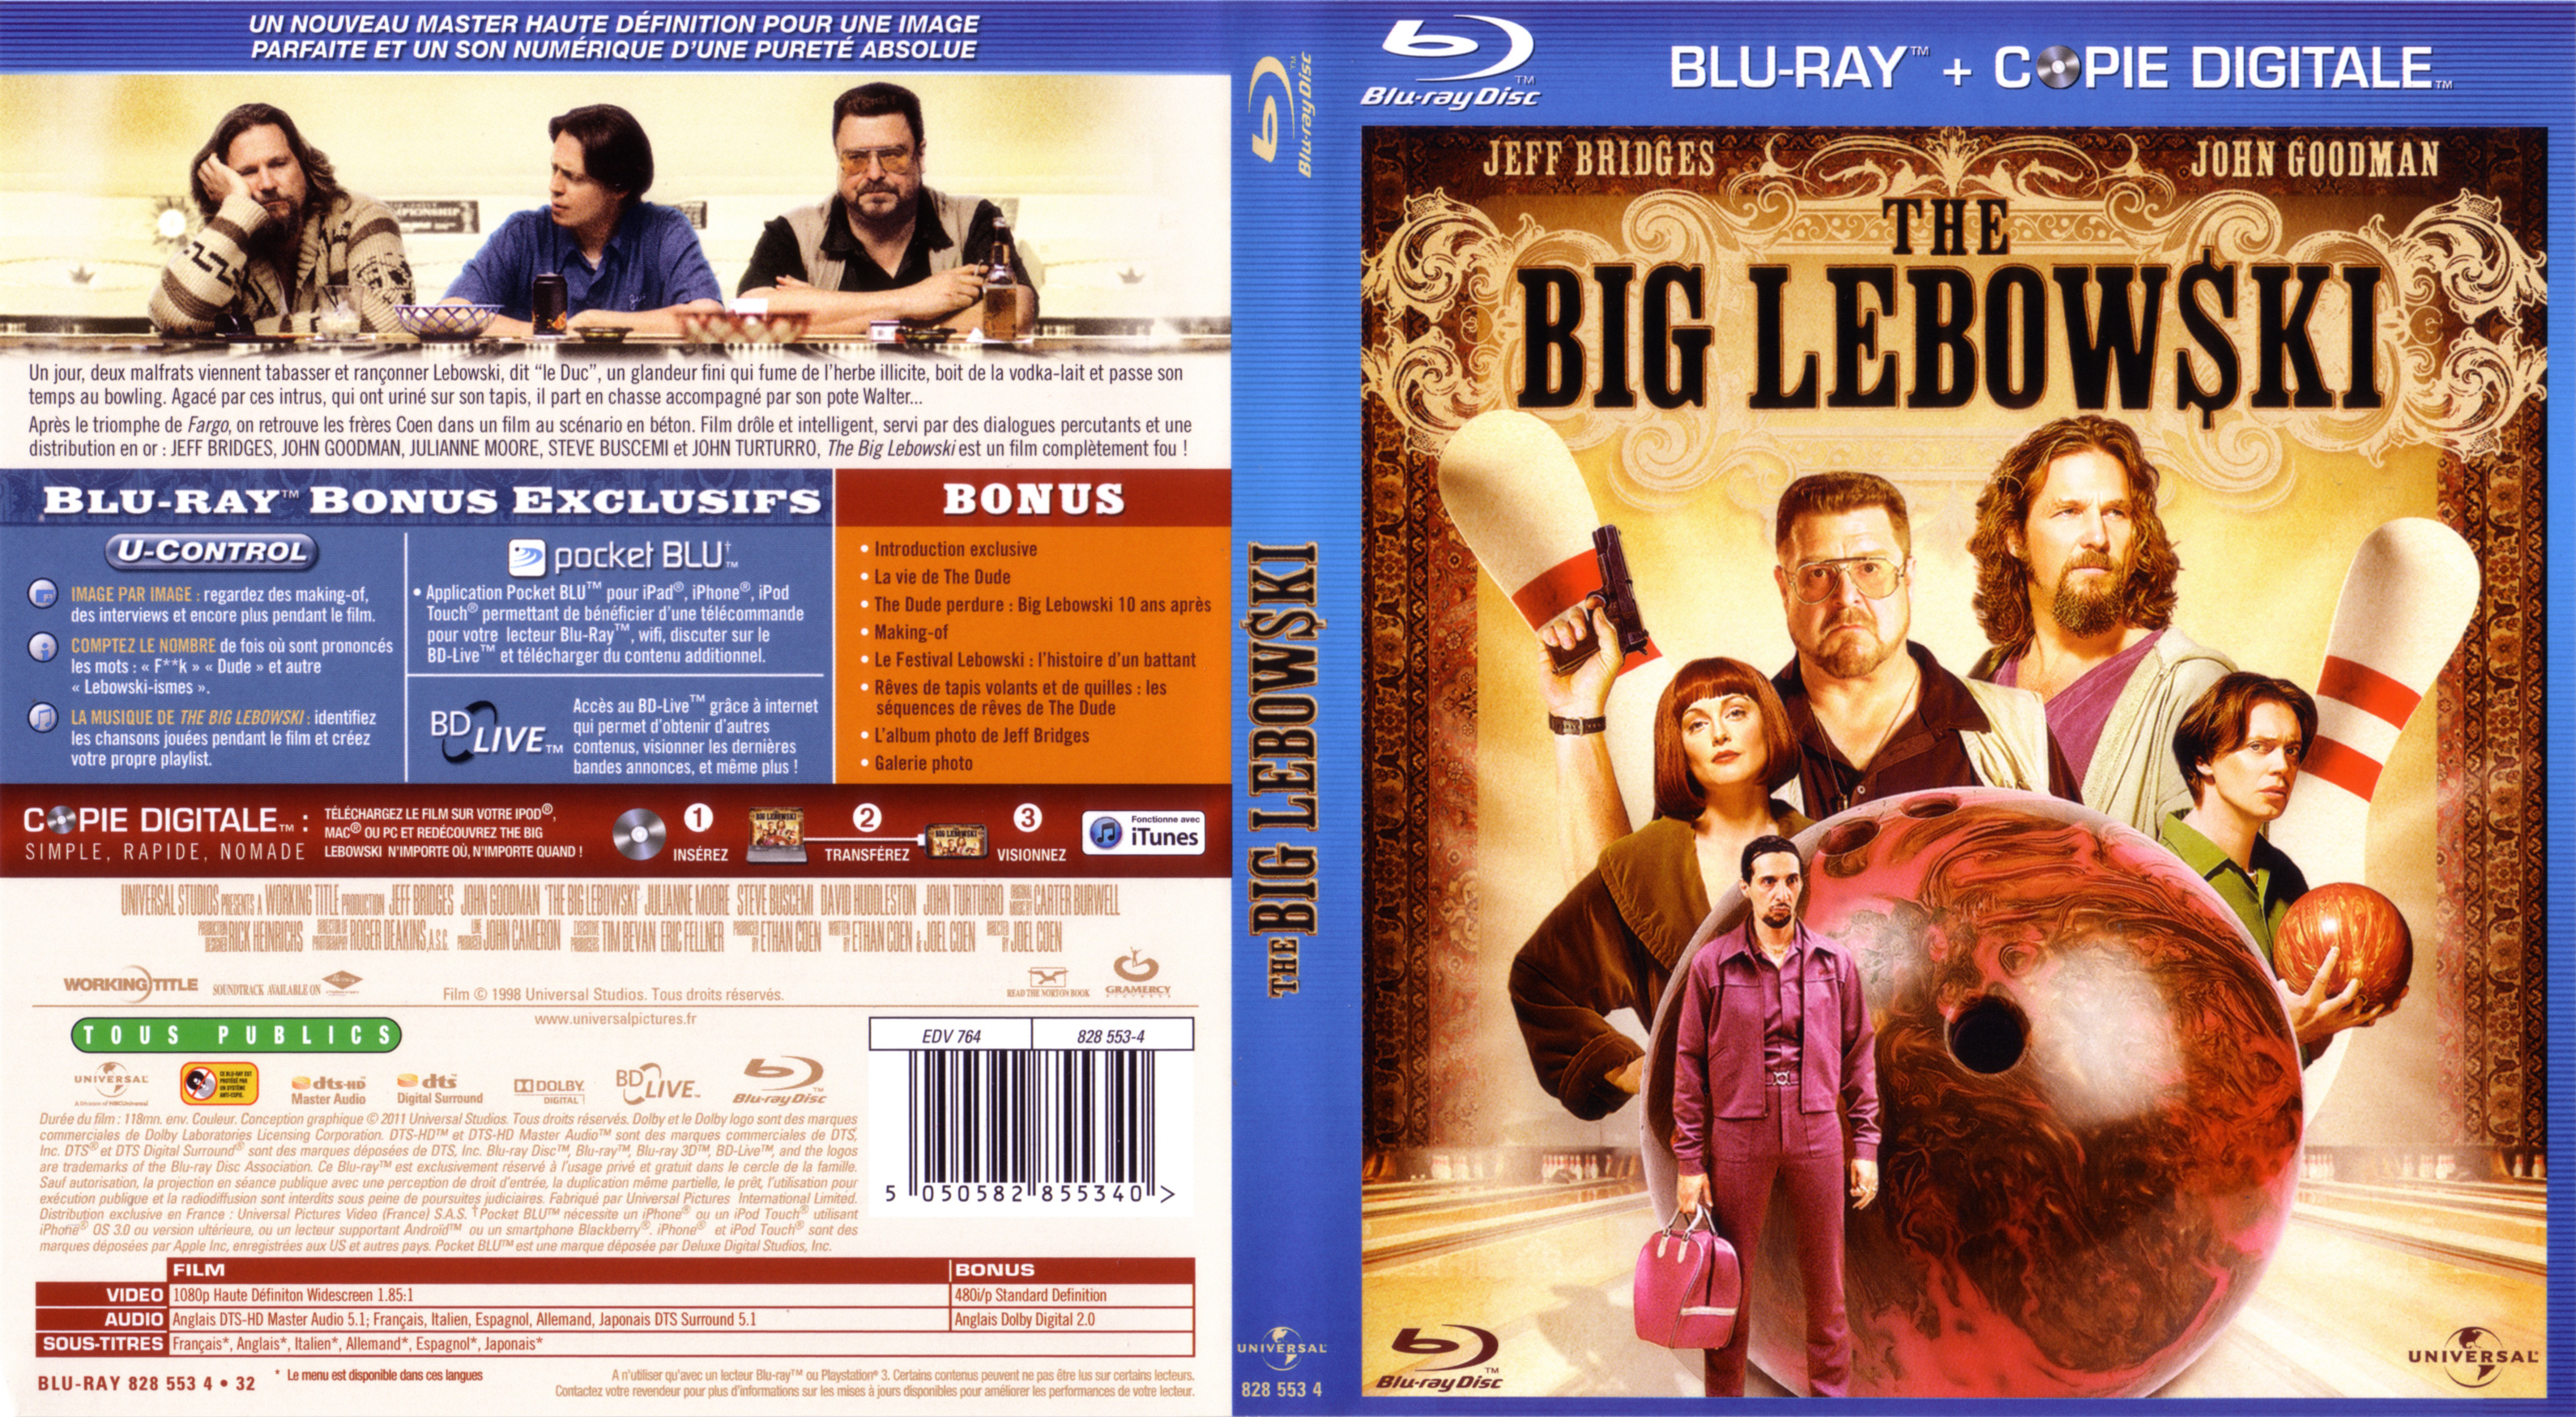 Jaquette DVD The big lebowski (BLU-RAY)